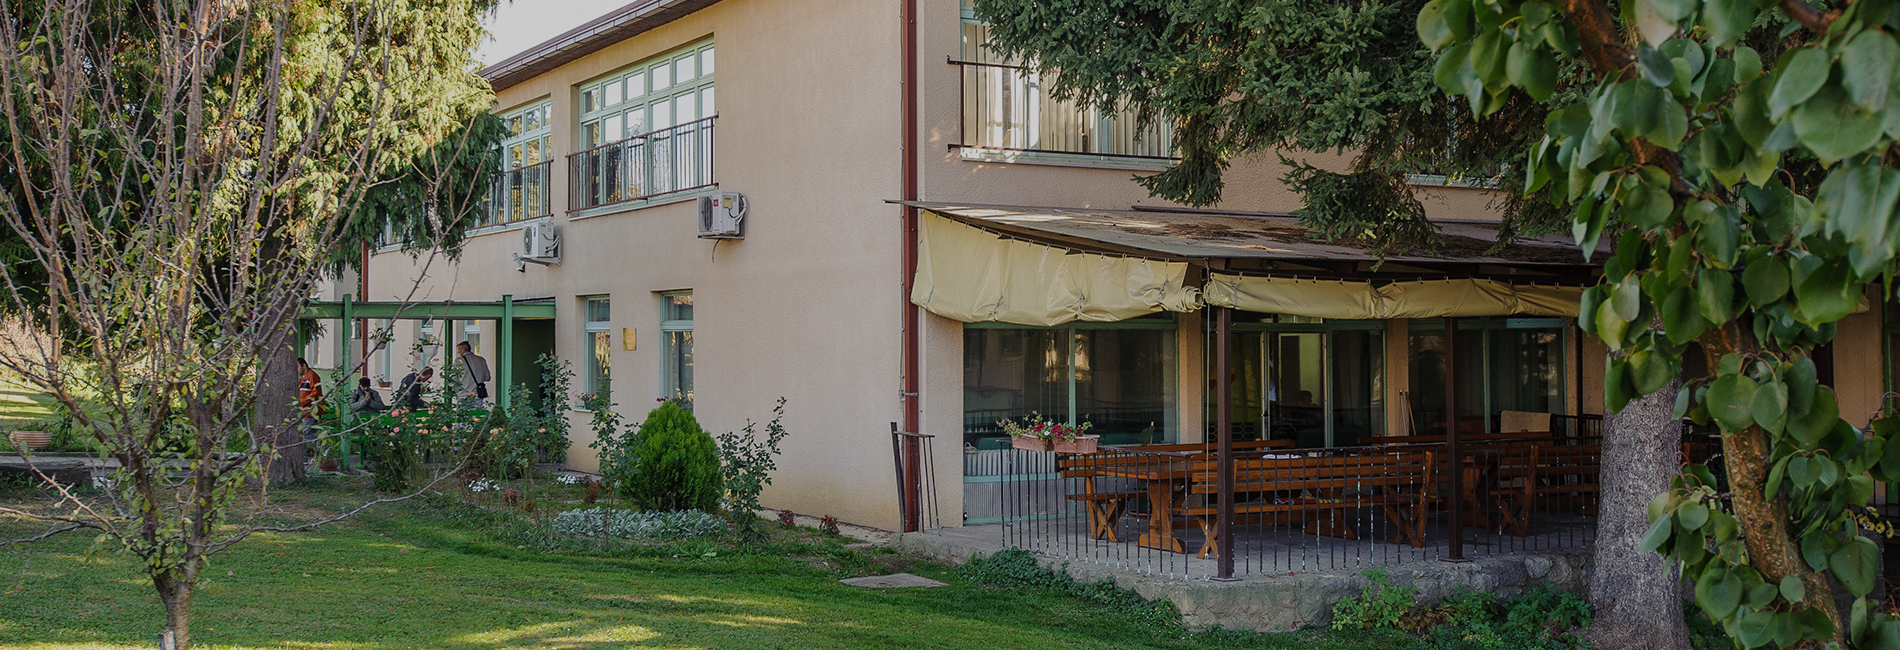 Dom za odrasle osobe Bjelovar